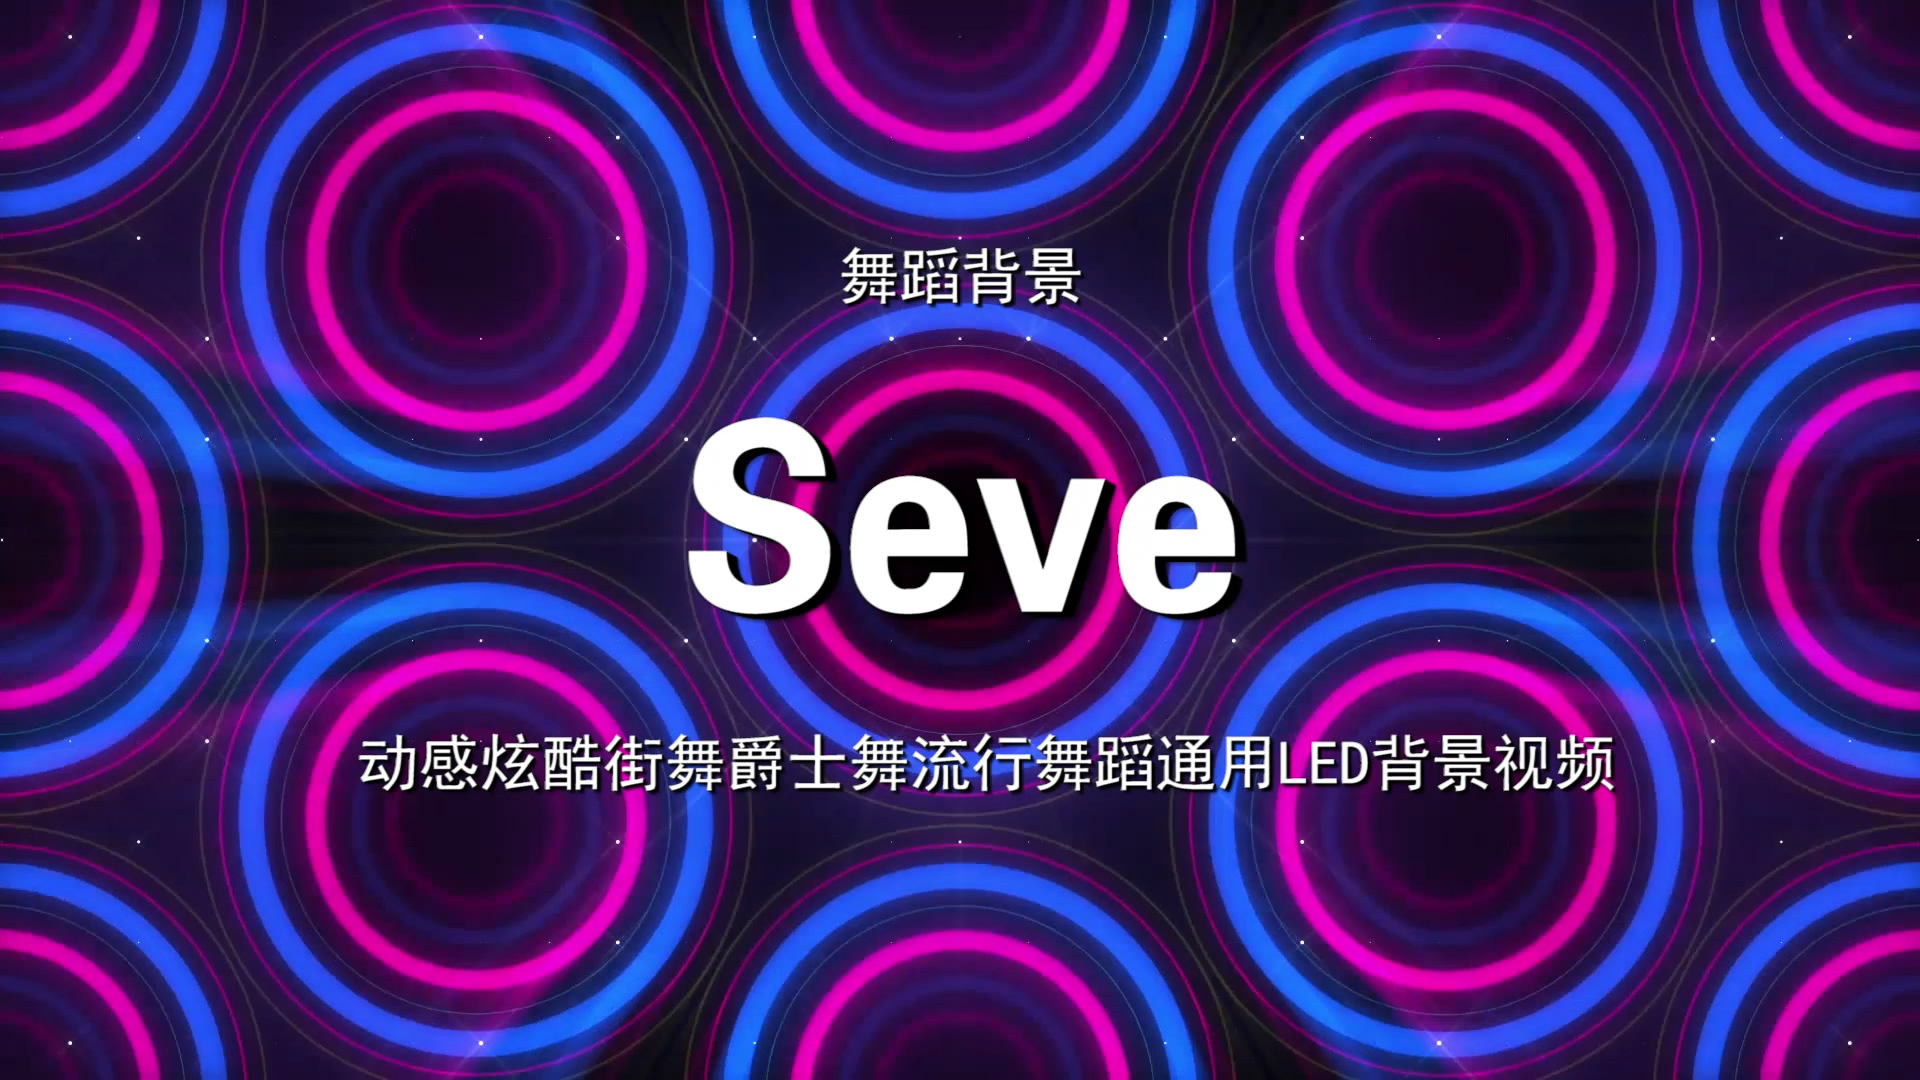 Seve 动感炫酷街舞流行歌舞LED背景大屏幕视频素材TV